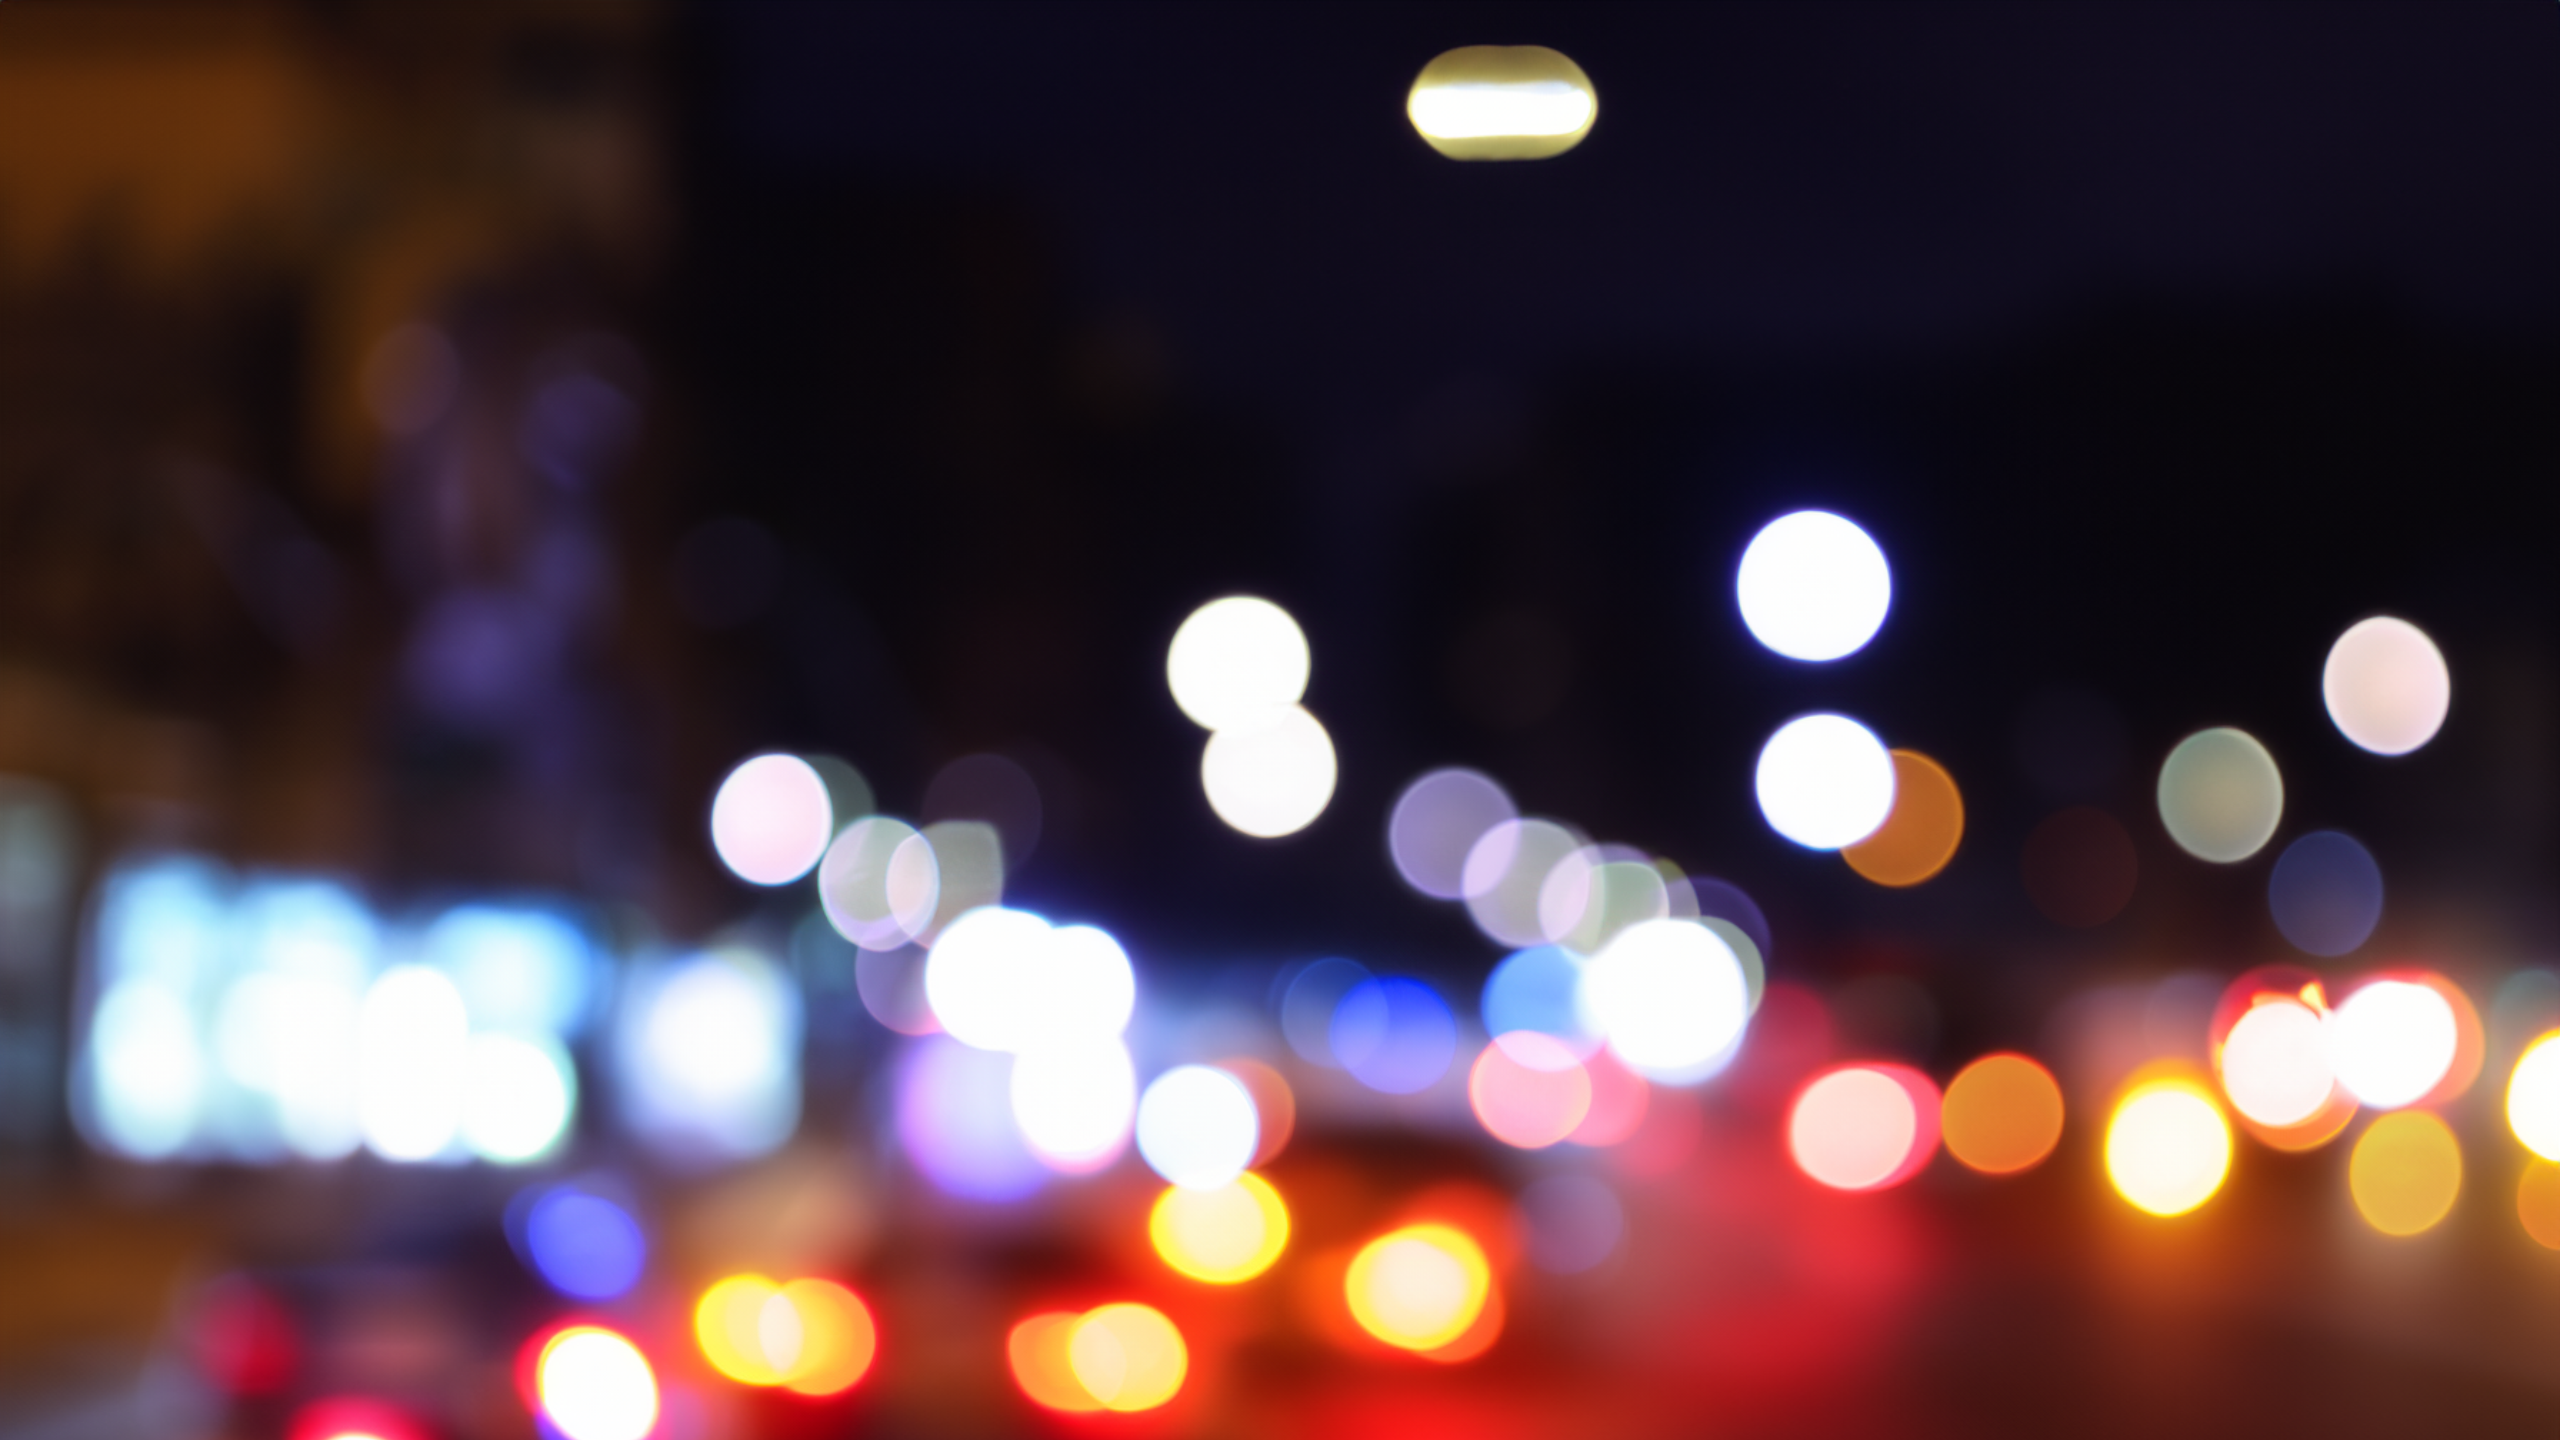 General 2560x1440 bokeh traffic city lights minimalism blurred blurry background simple background